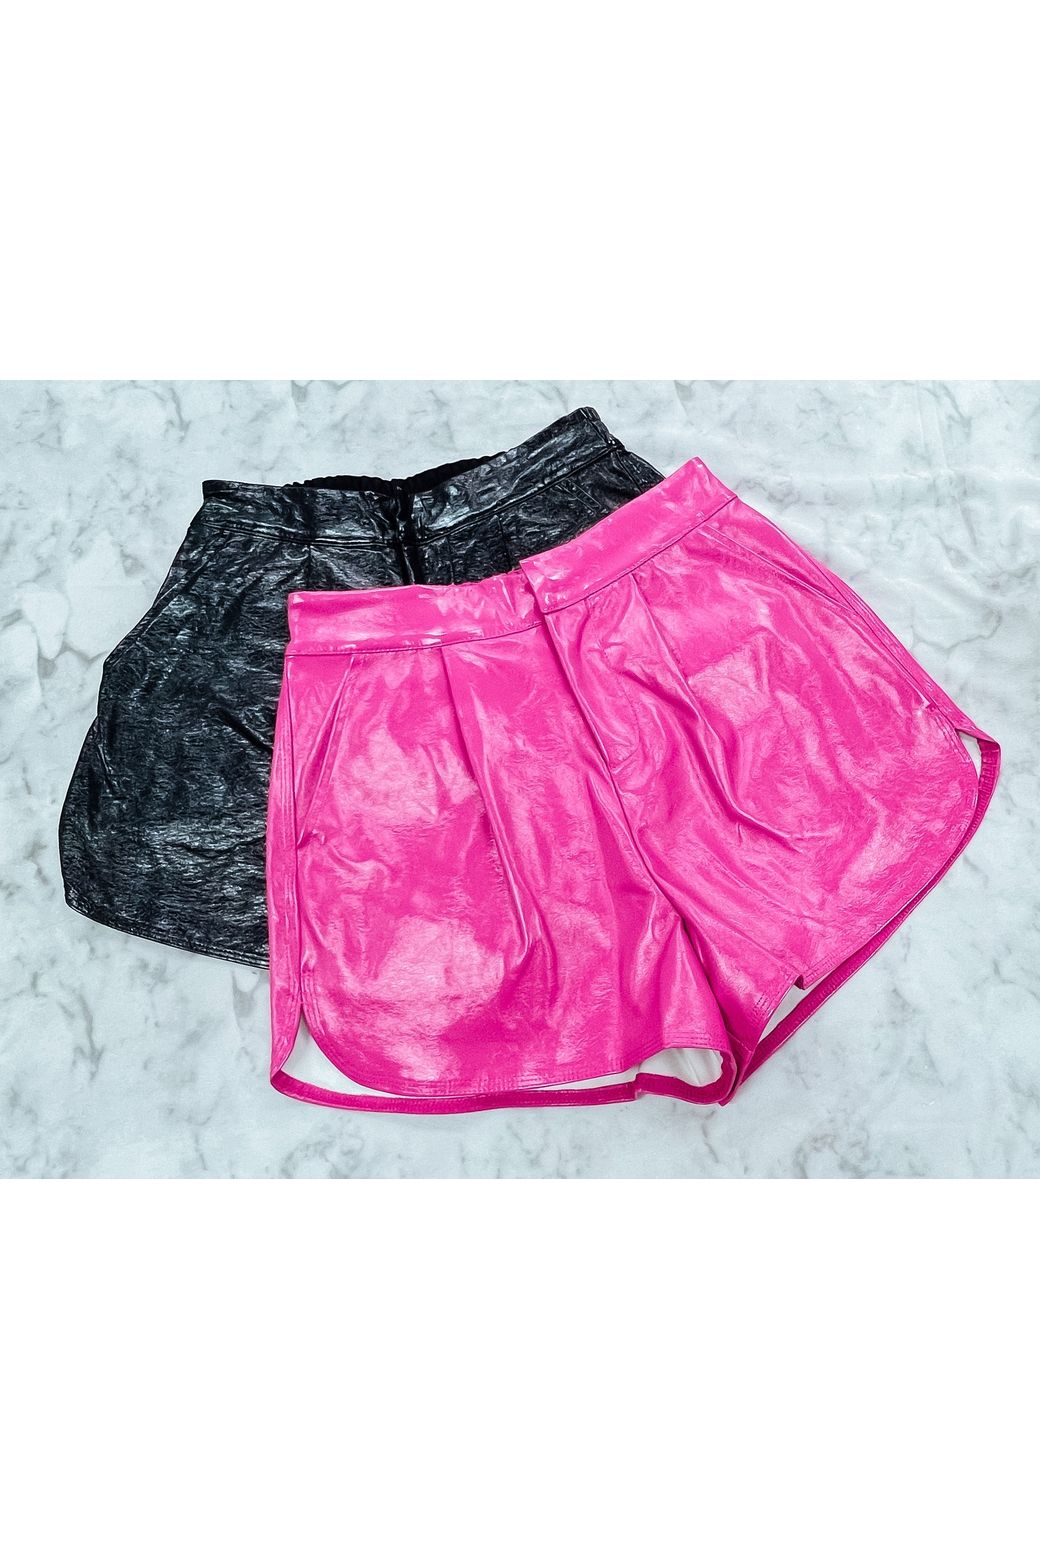 Endless Rose High Waisted Shorts – KCoutureBoutique